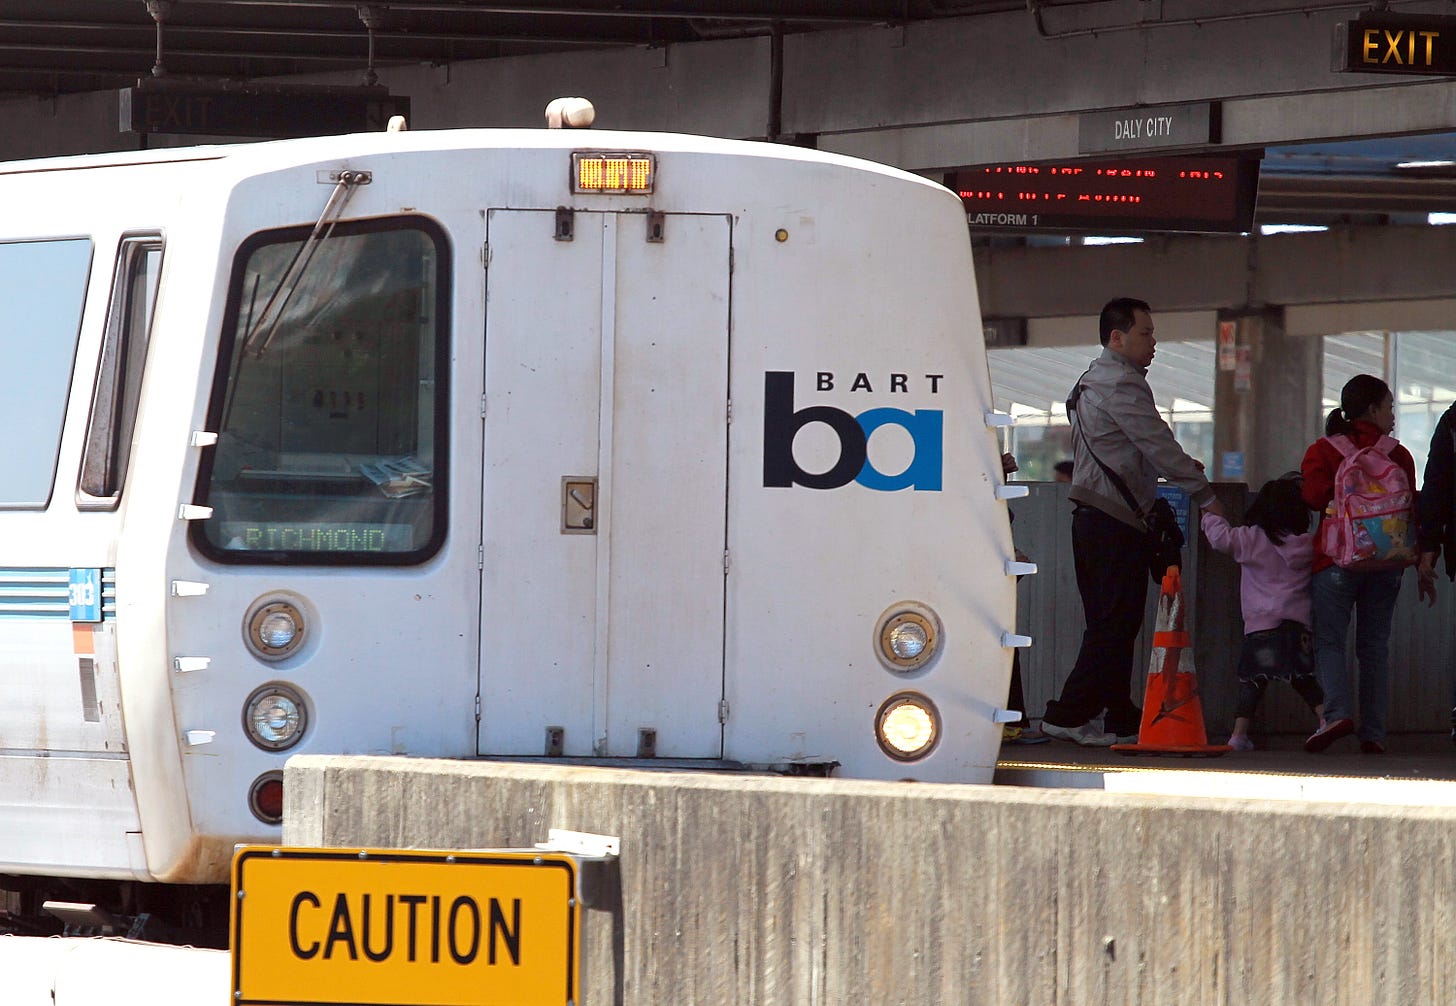 A Bart train in SF